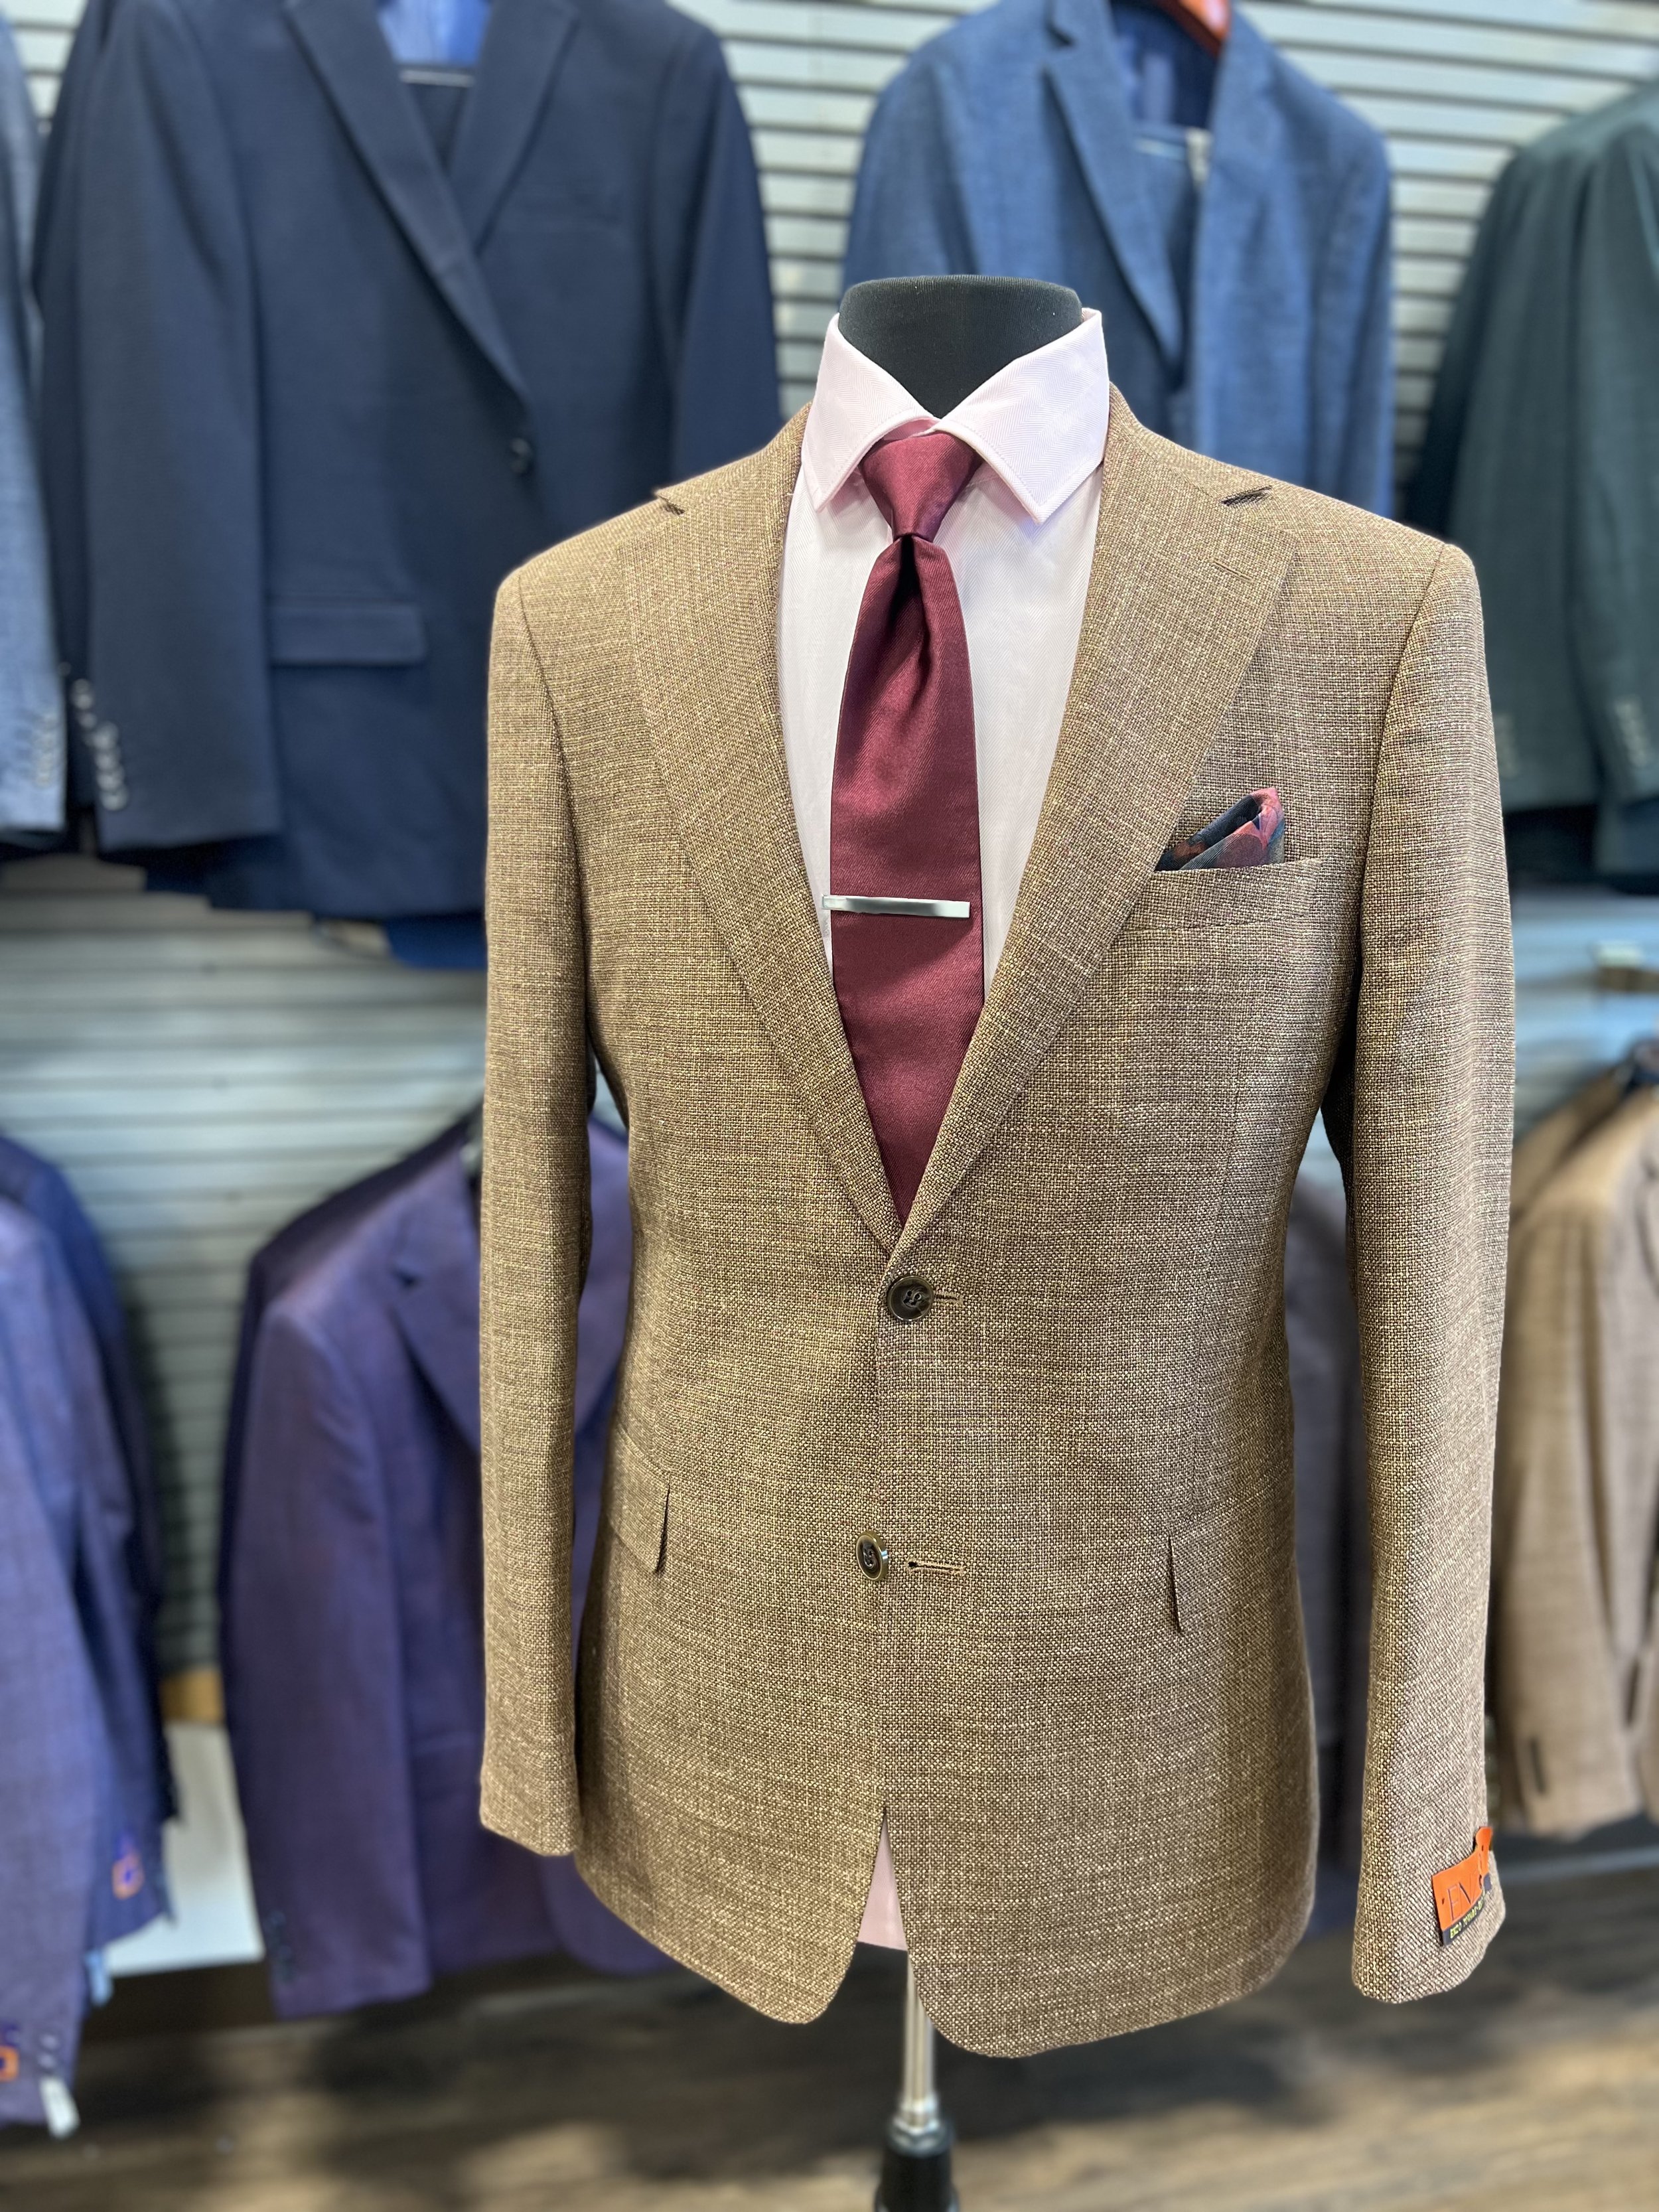 Suits — Mr Formal Wear